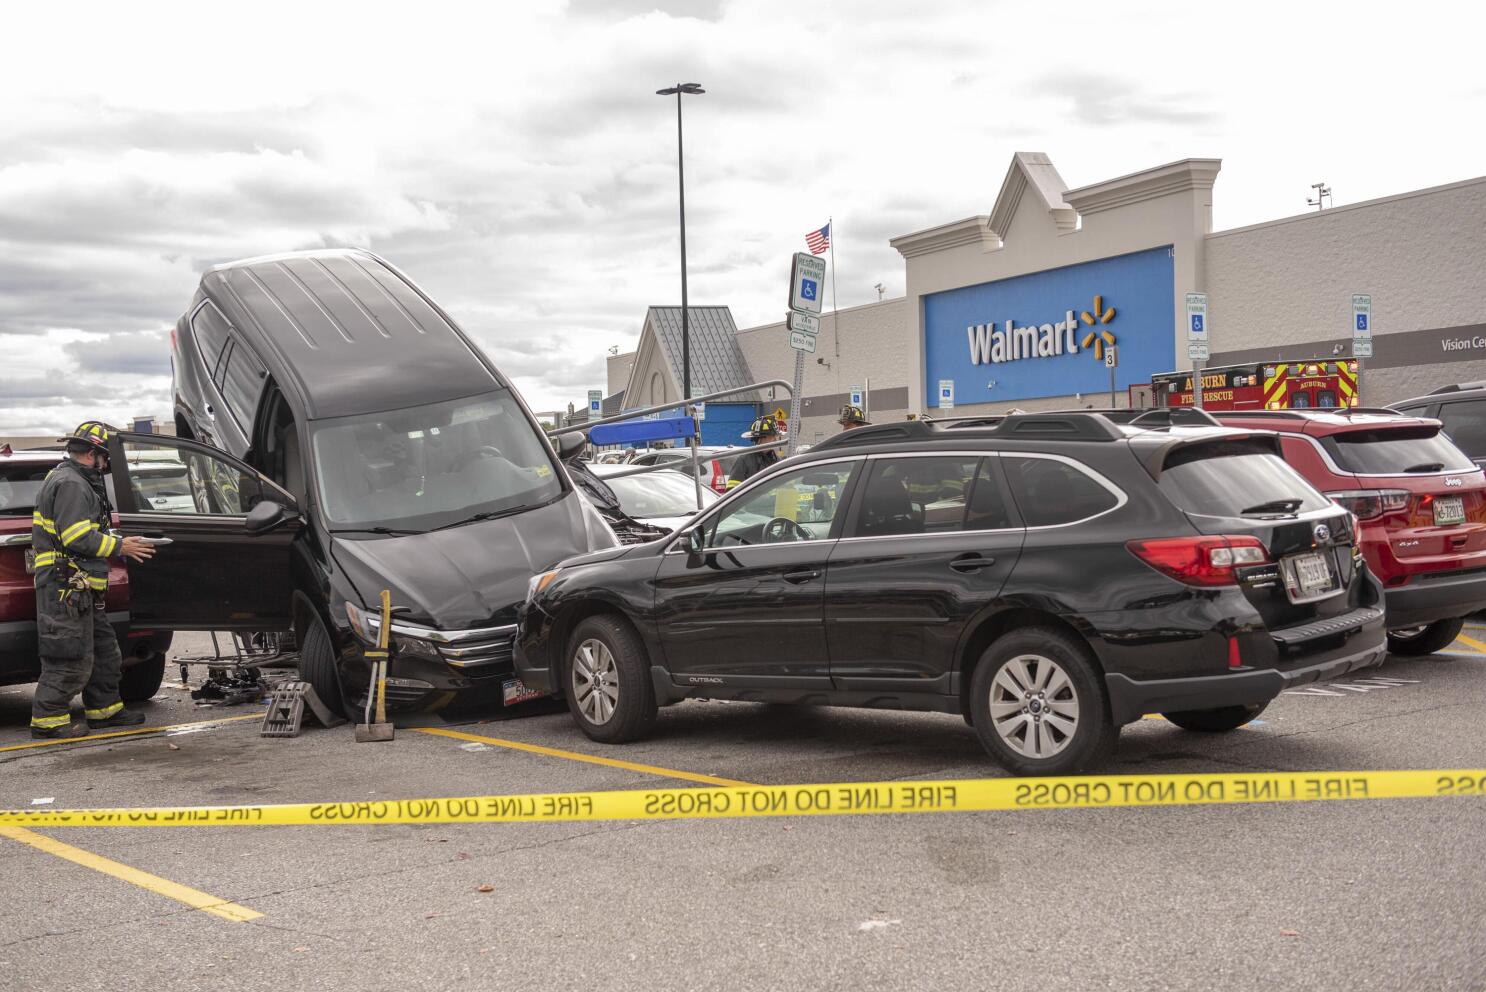 None injured in Walmart parking lot pileup involving 7 cars | AP News